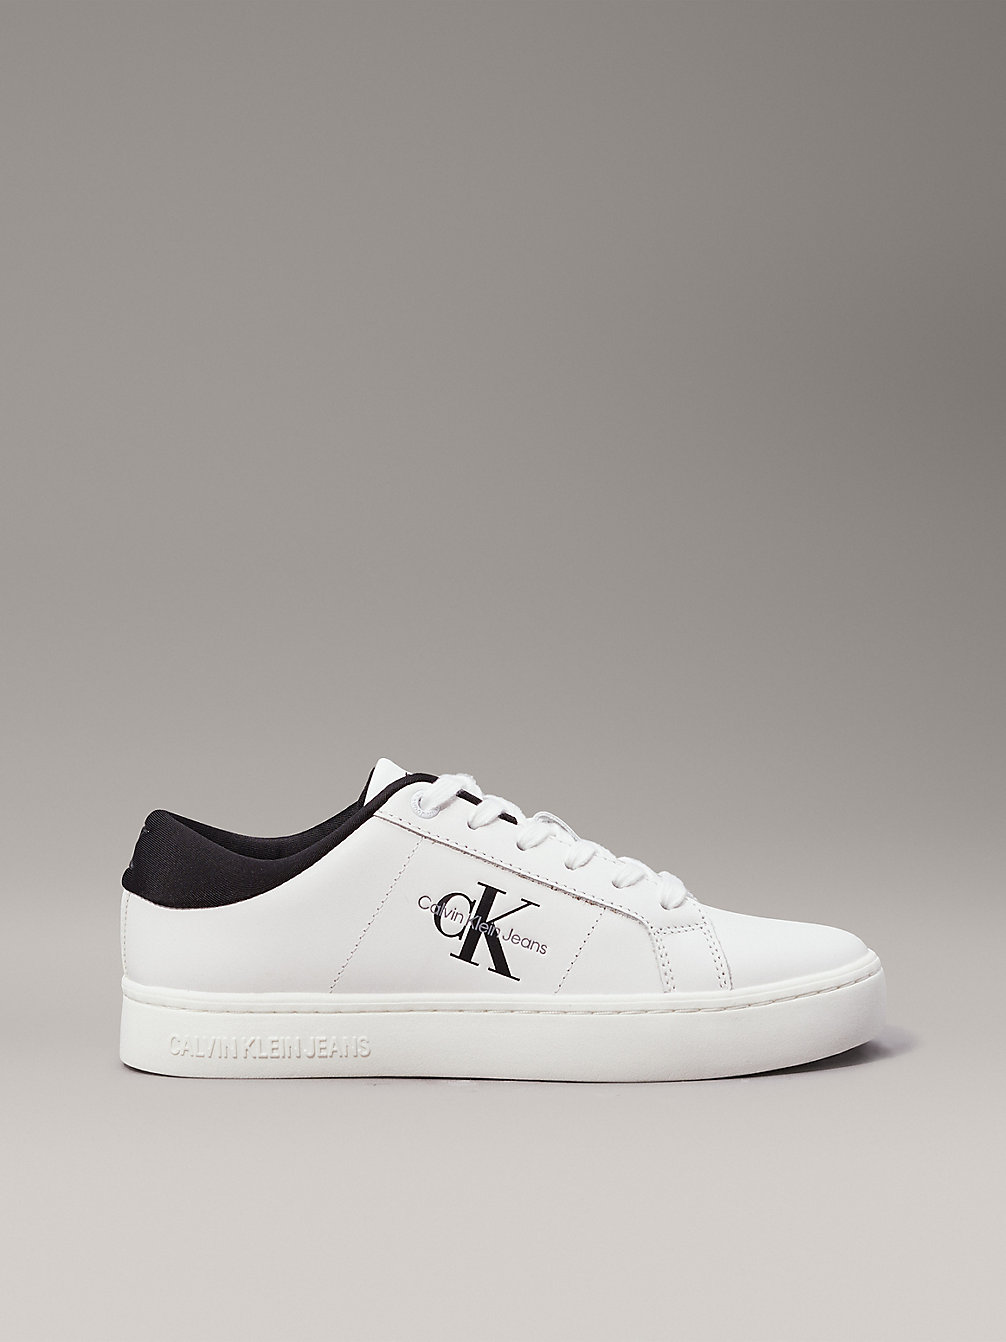 BRIGHT WHITE/BLACK > Leder-Sneakers > undefined Damen - Calvin Klein